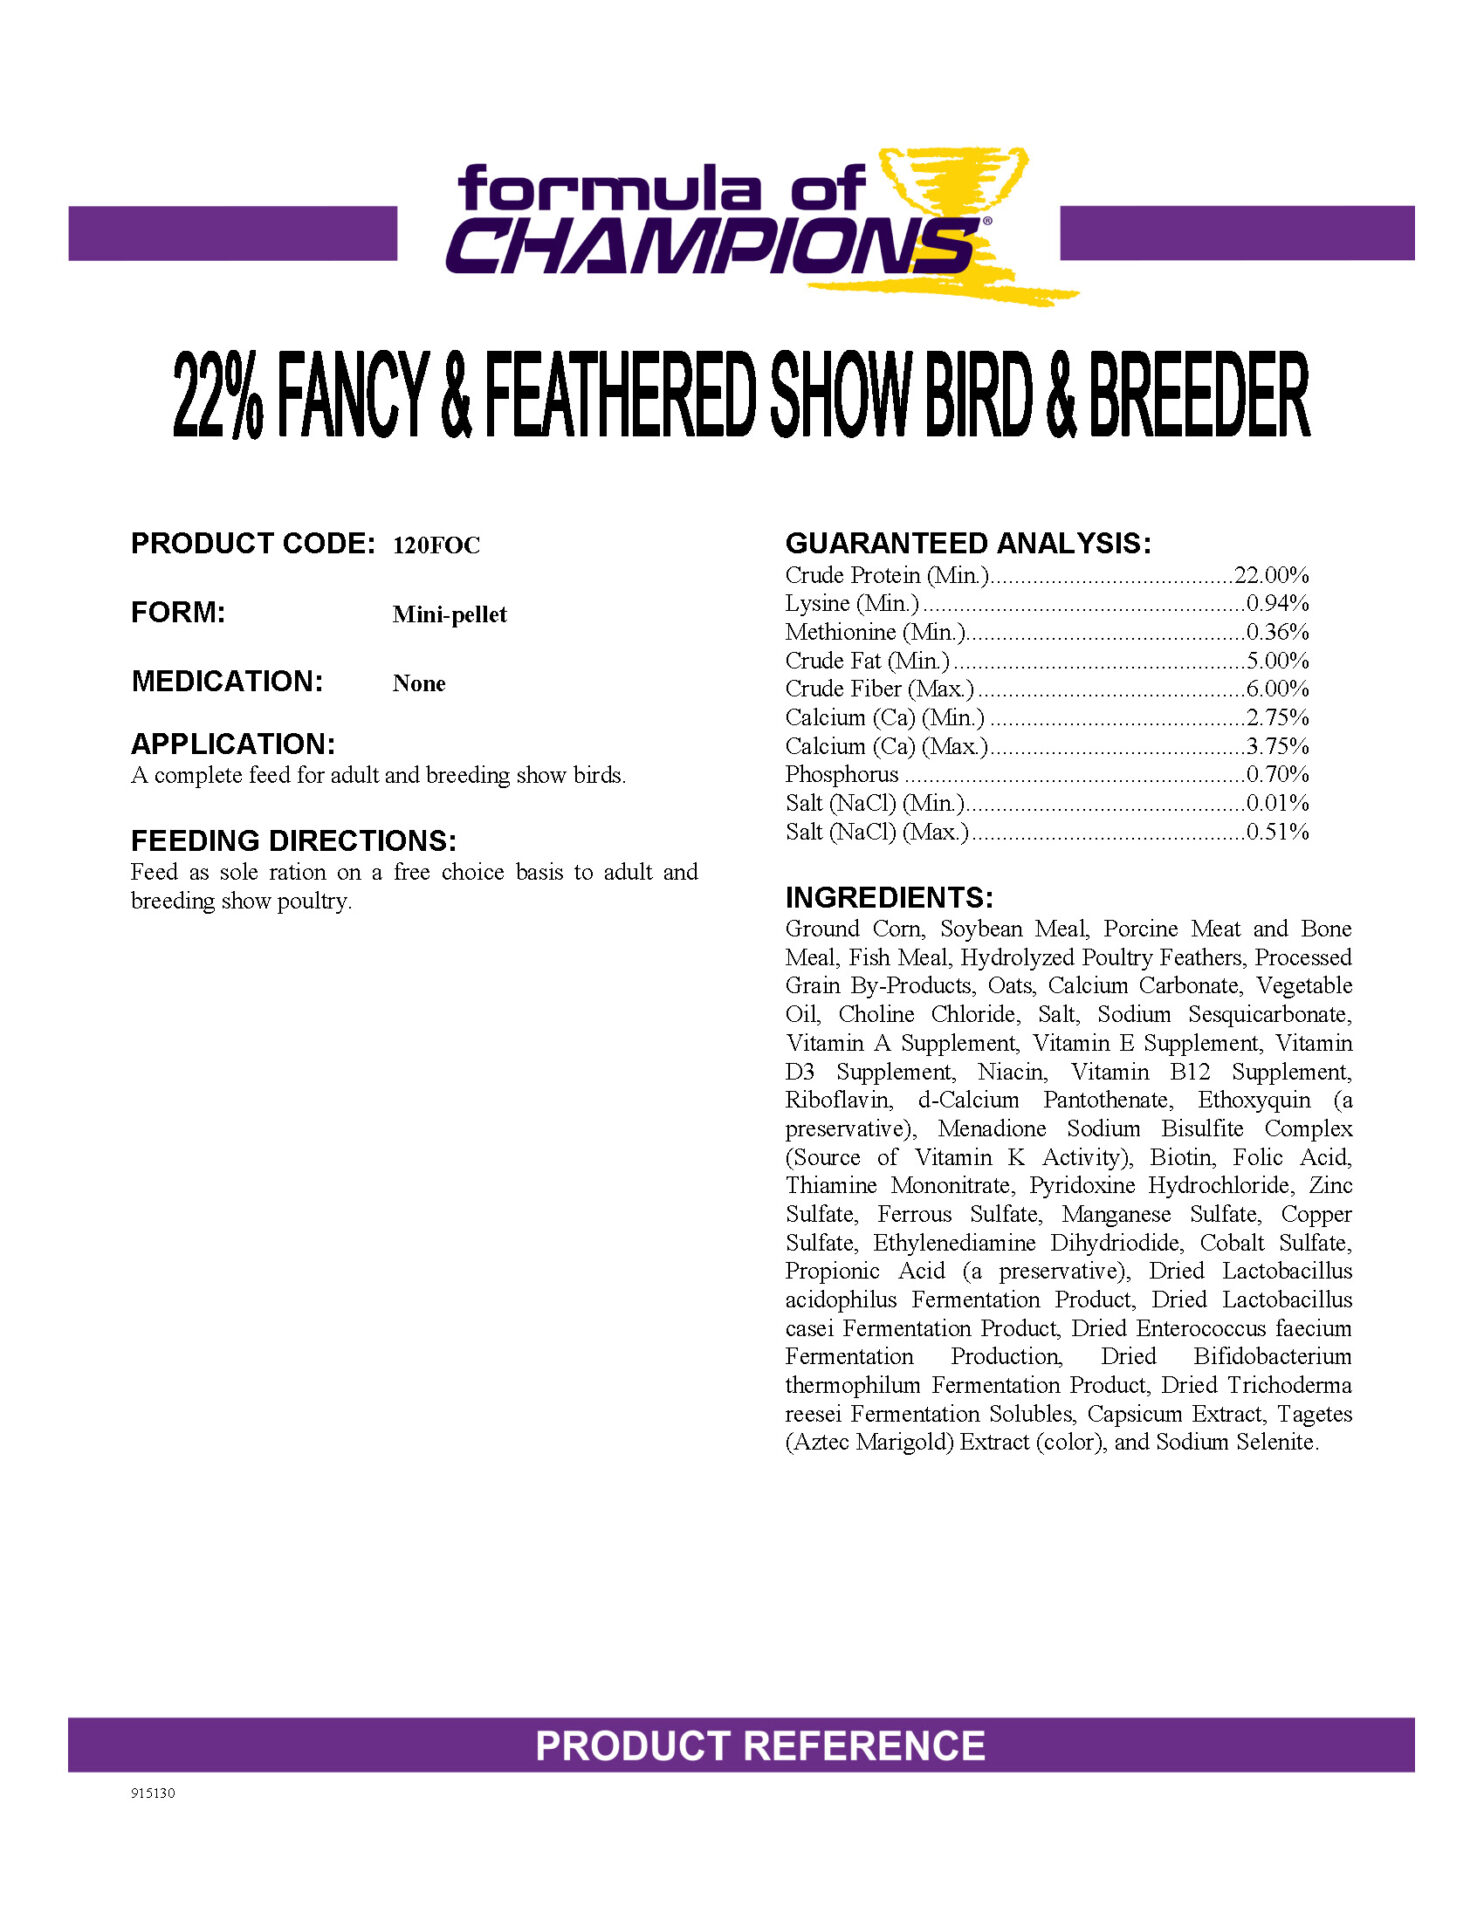 Fancy & Feathered feed spec sheet